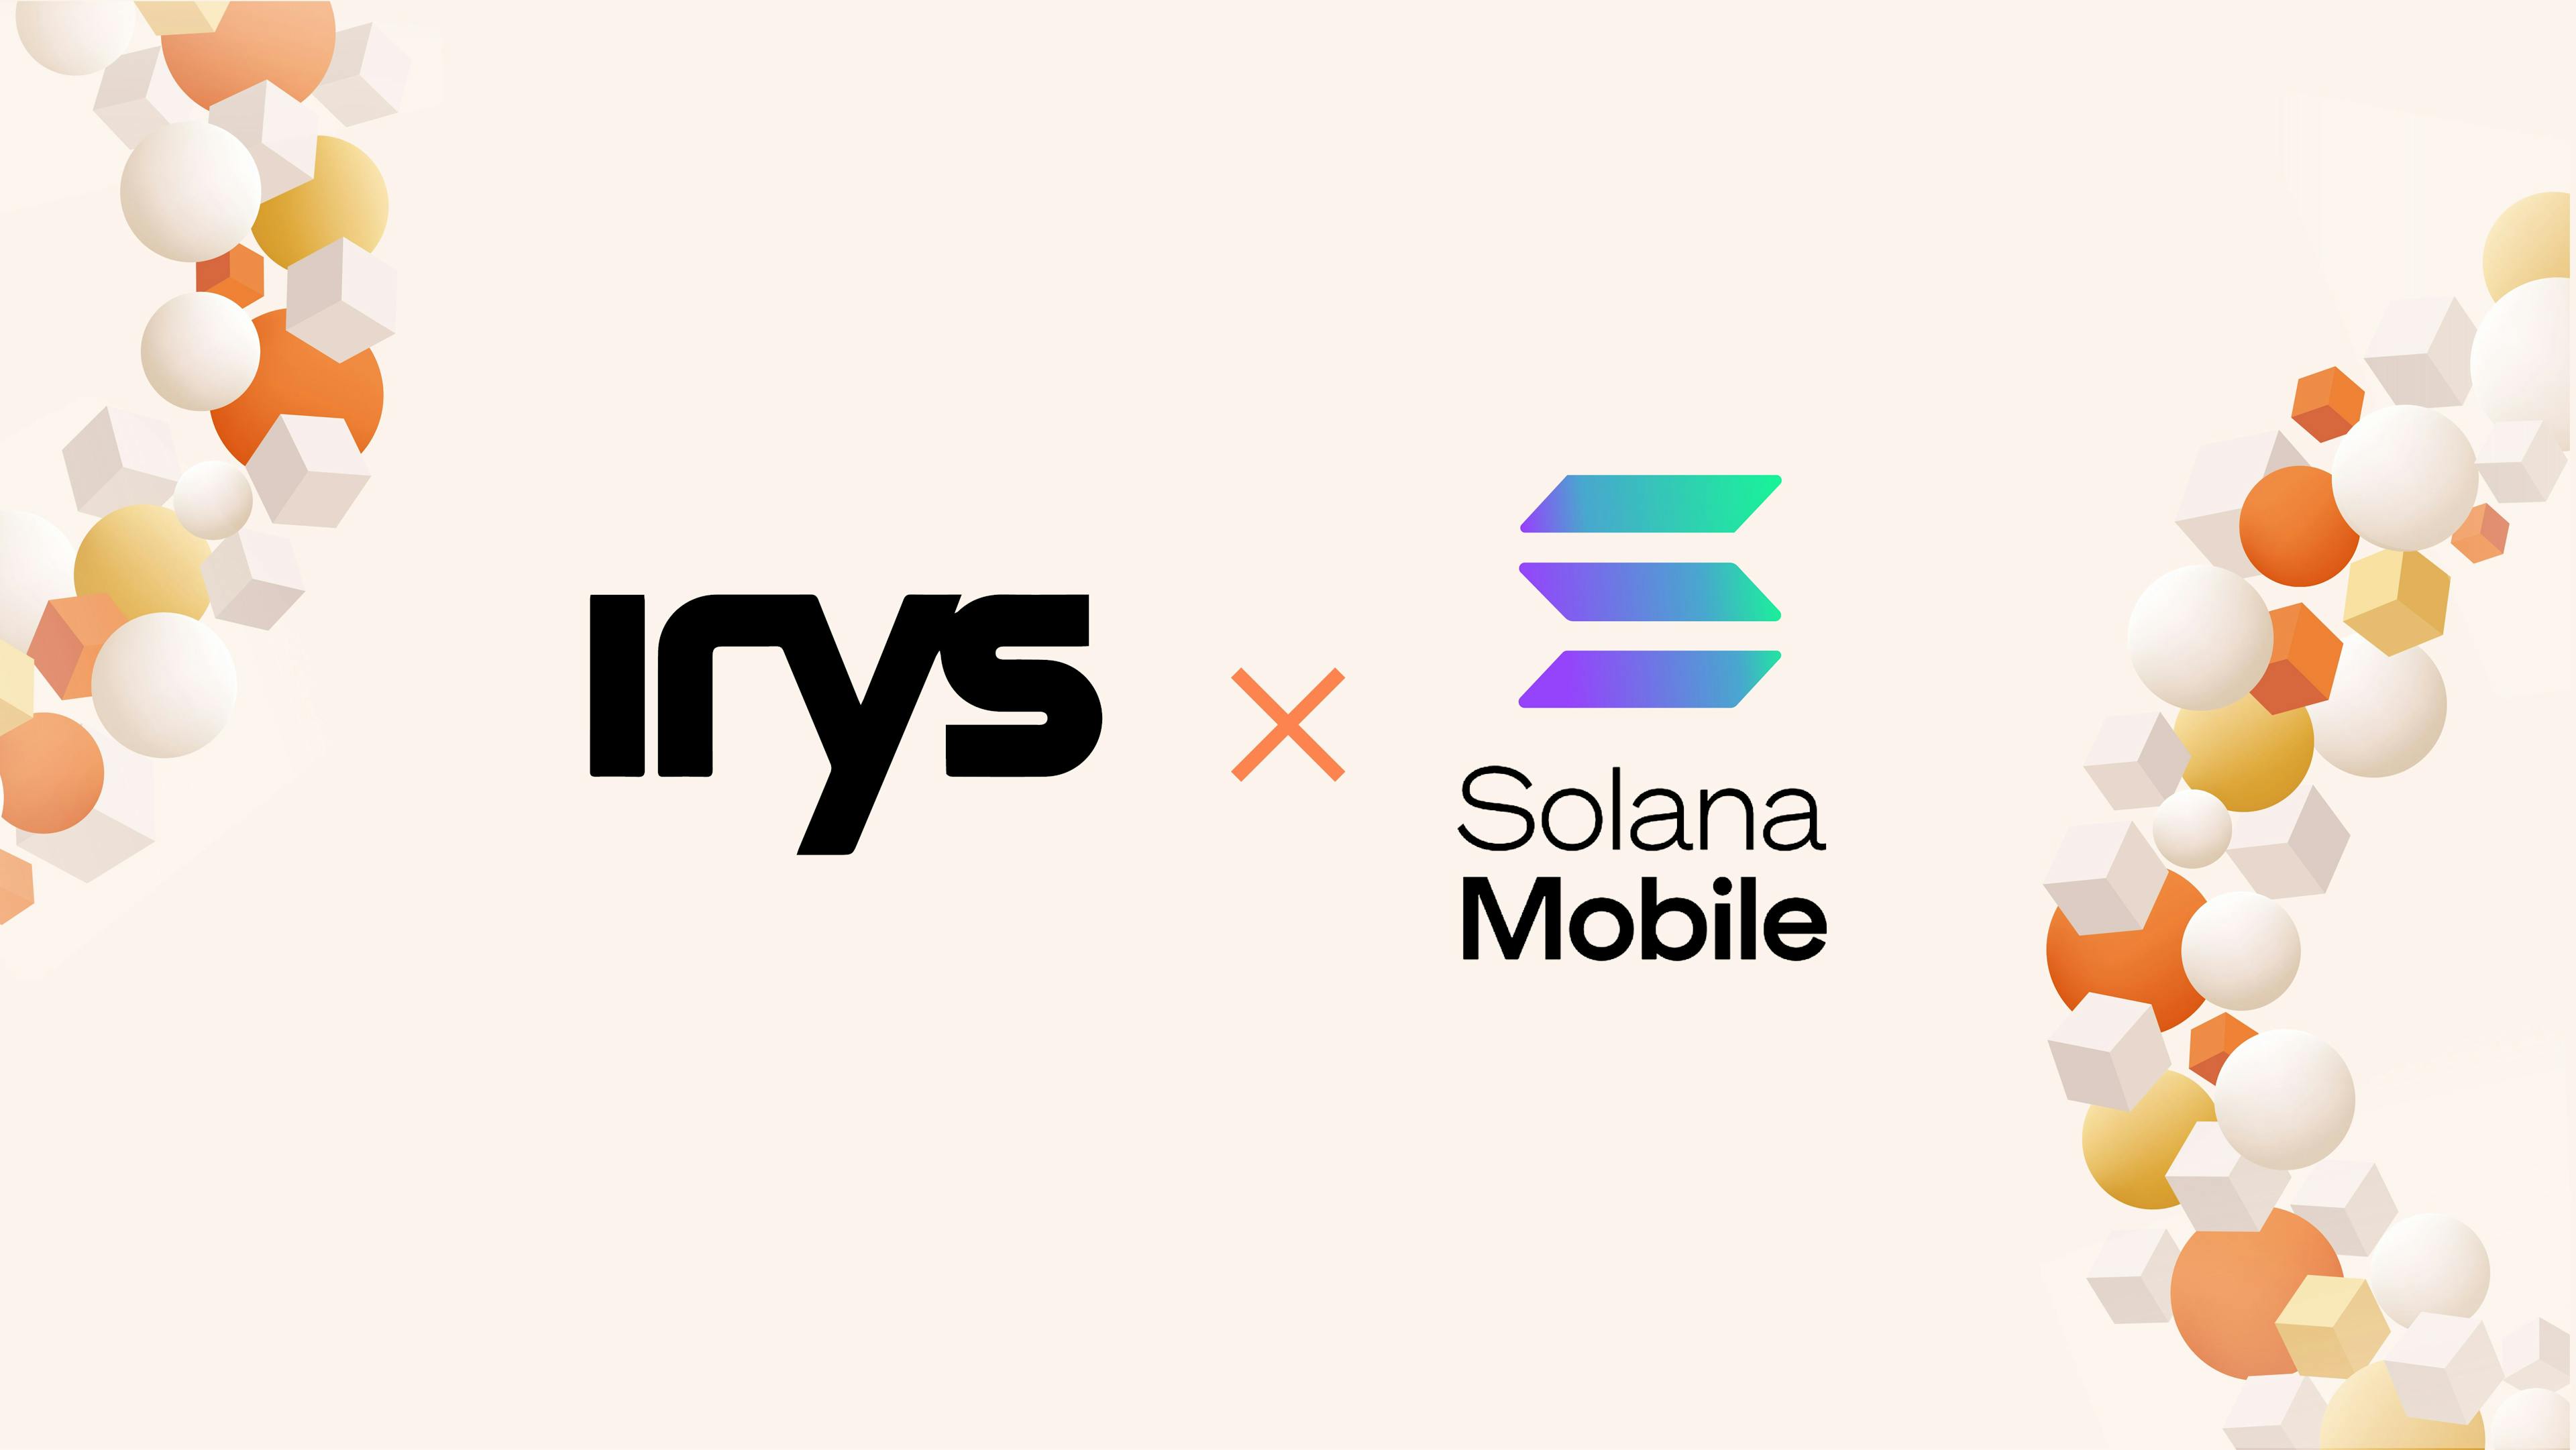 Irys brings provenance to Solana Mobile